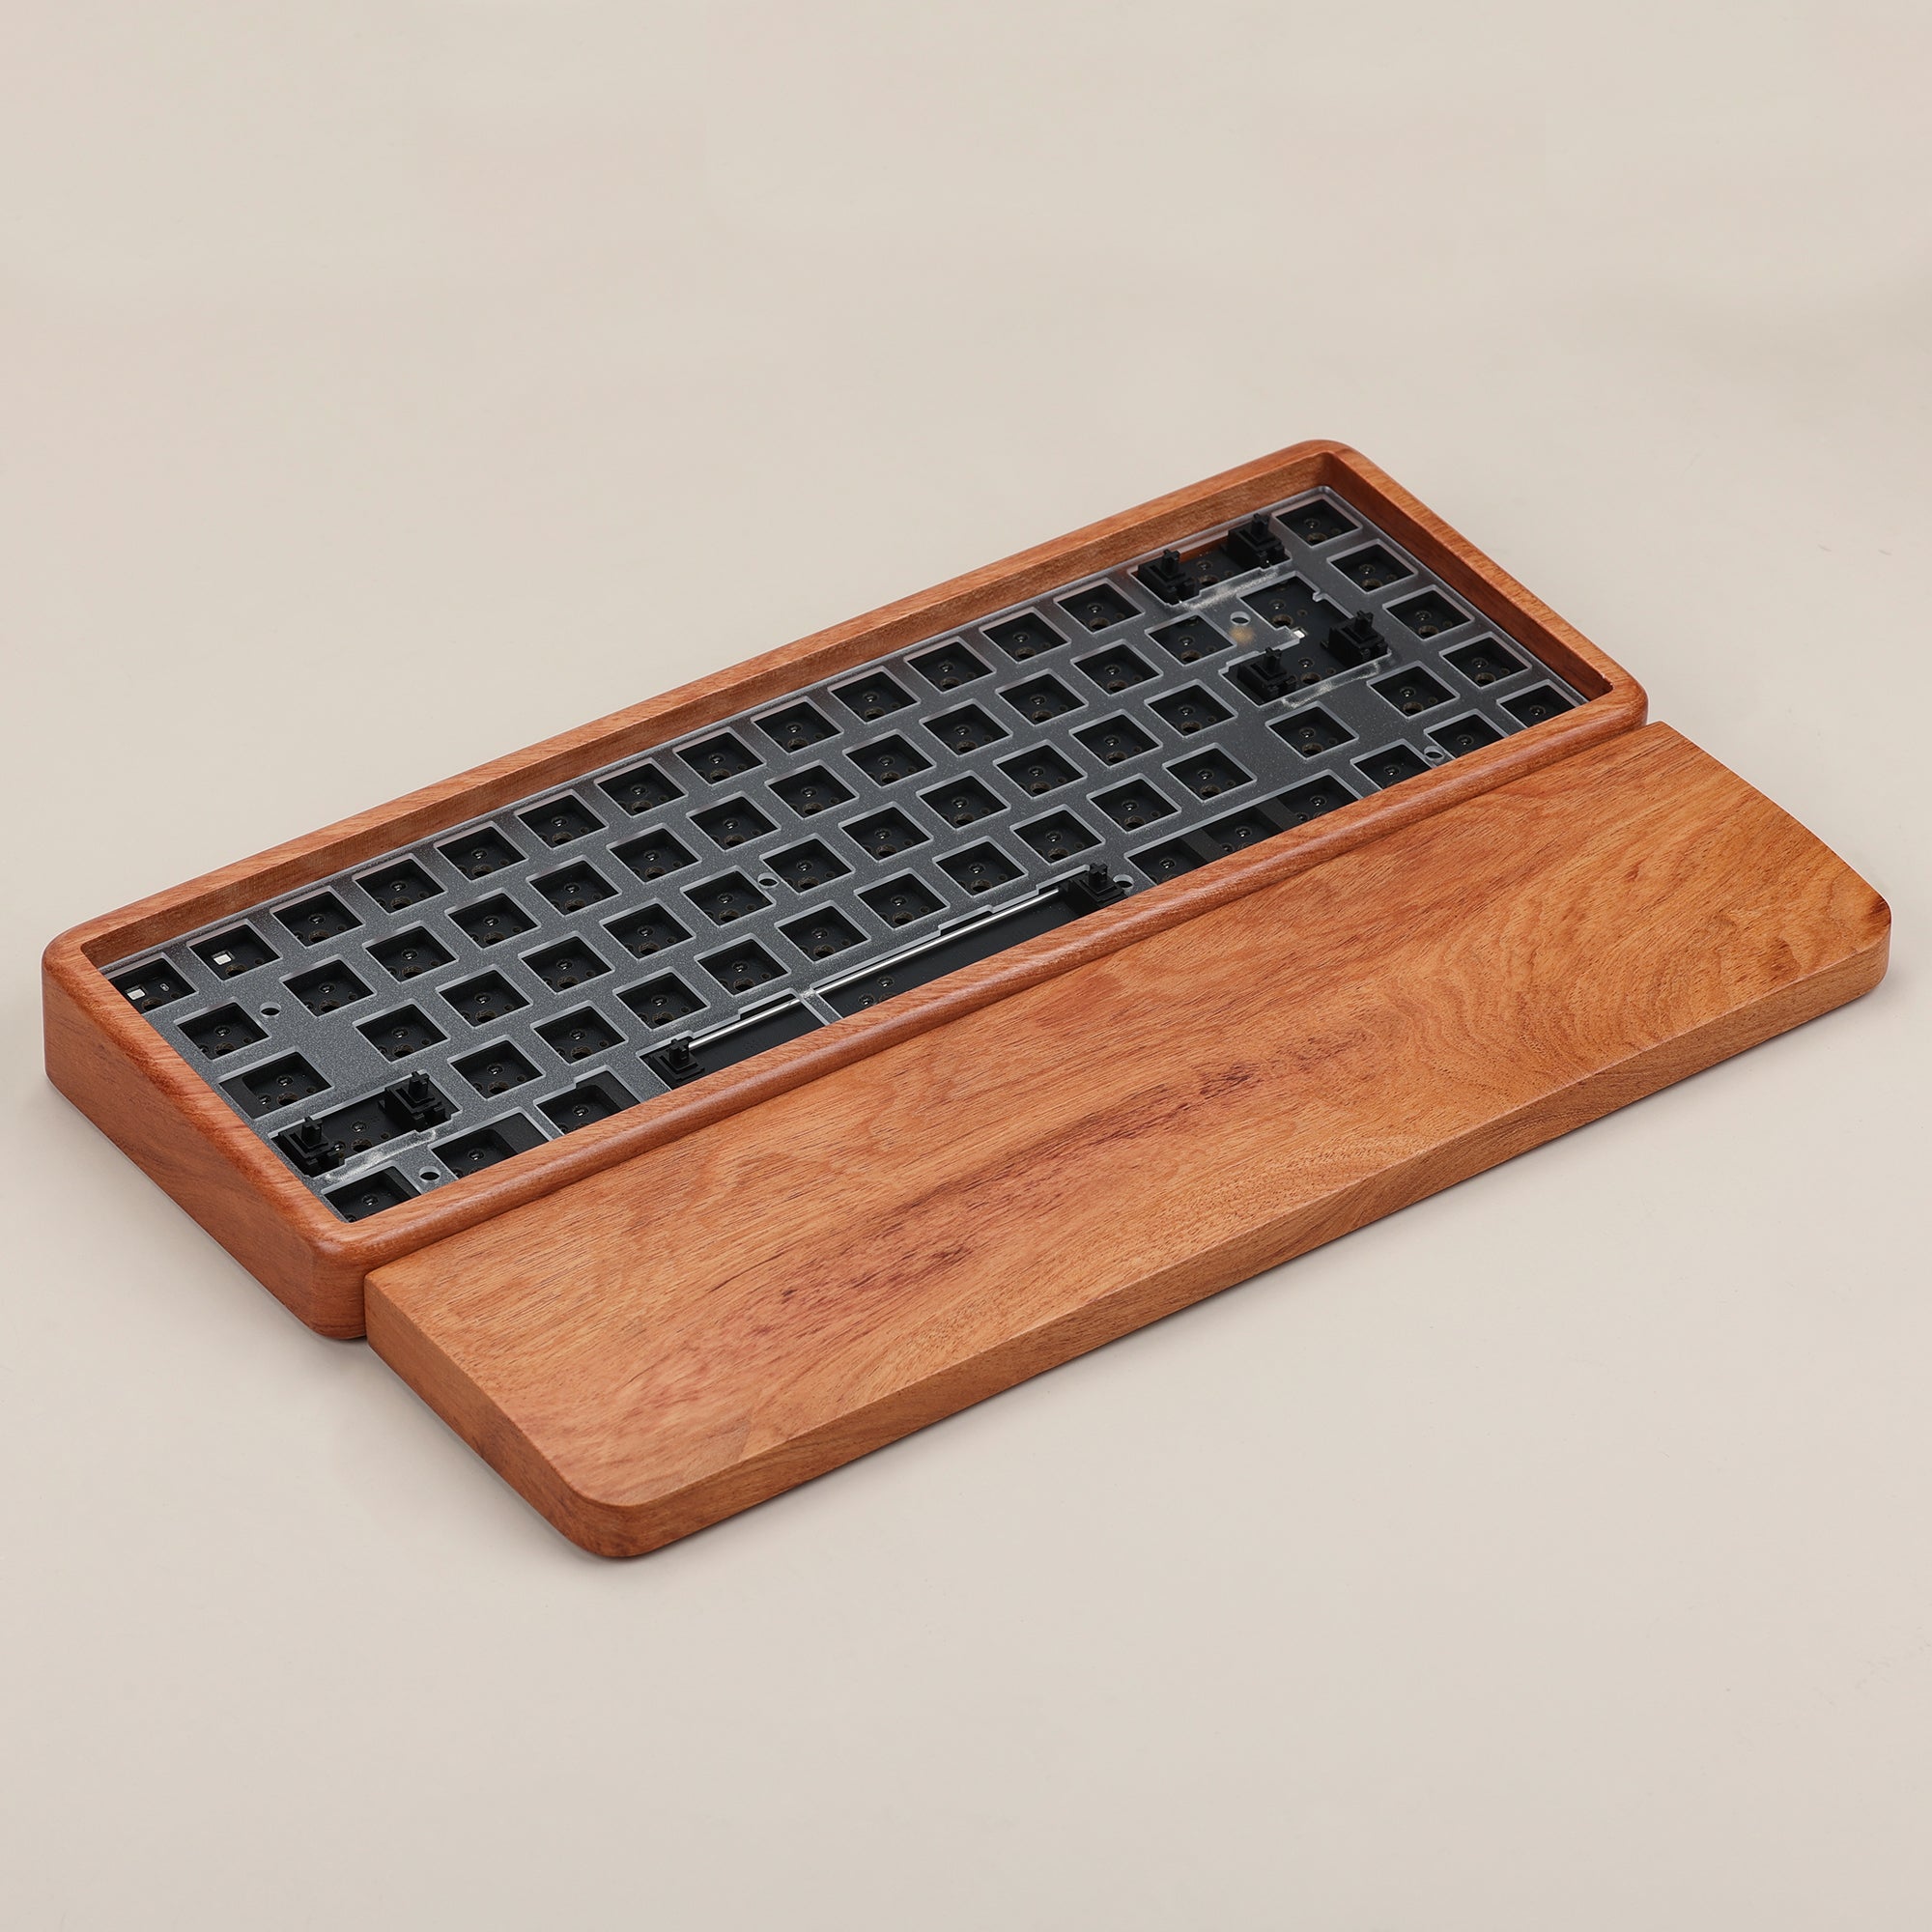 KBDfans 65% Wooden Case Hot-Swap Mechanical Keyboard DIY KIT With Wrist Tray Mount